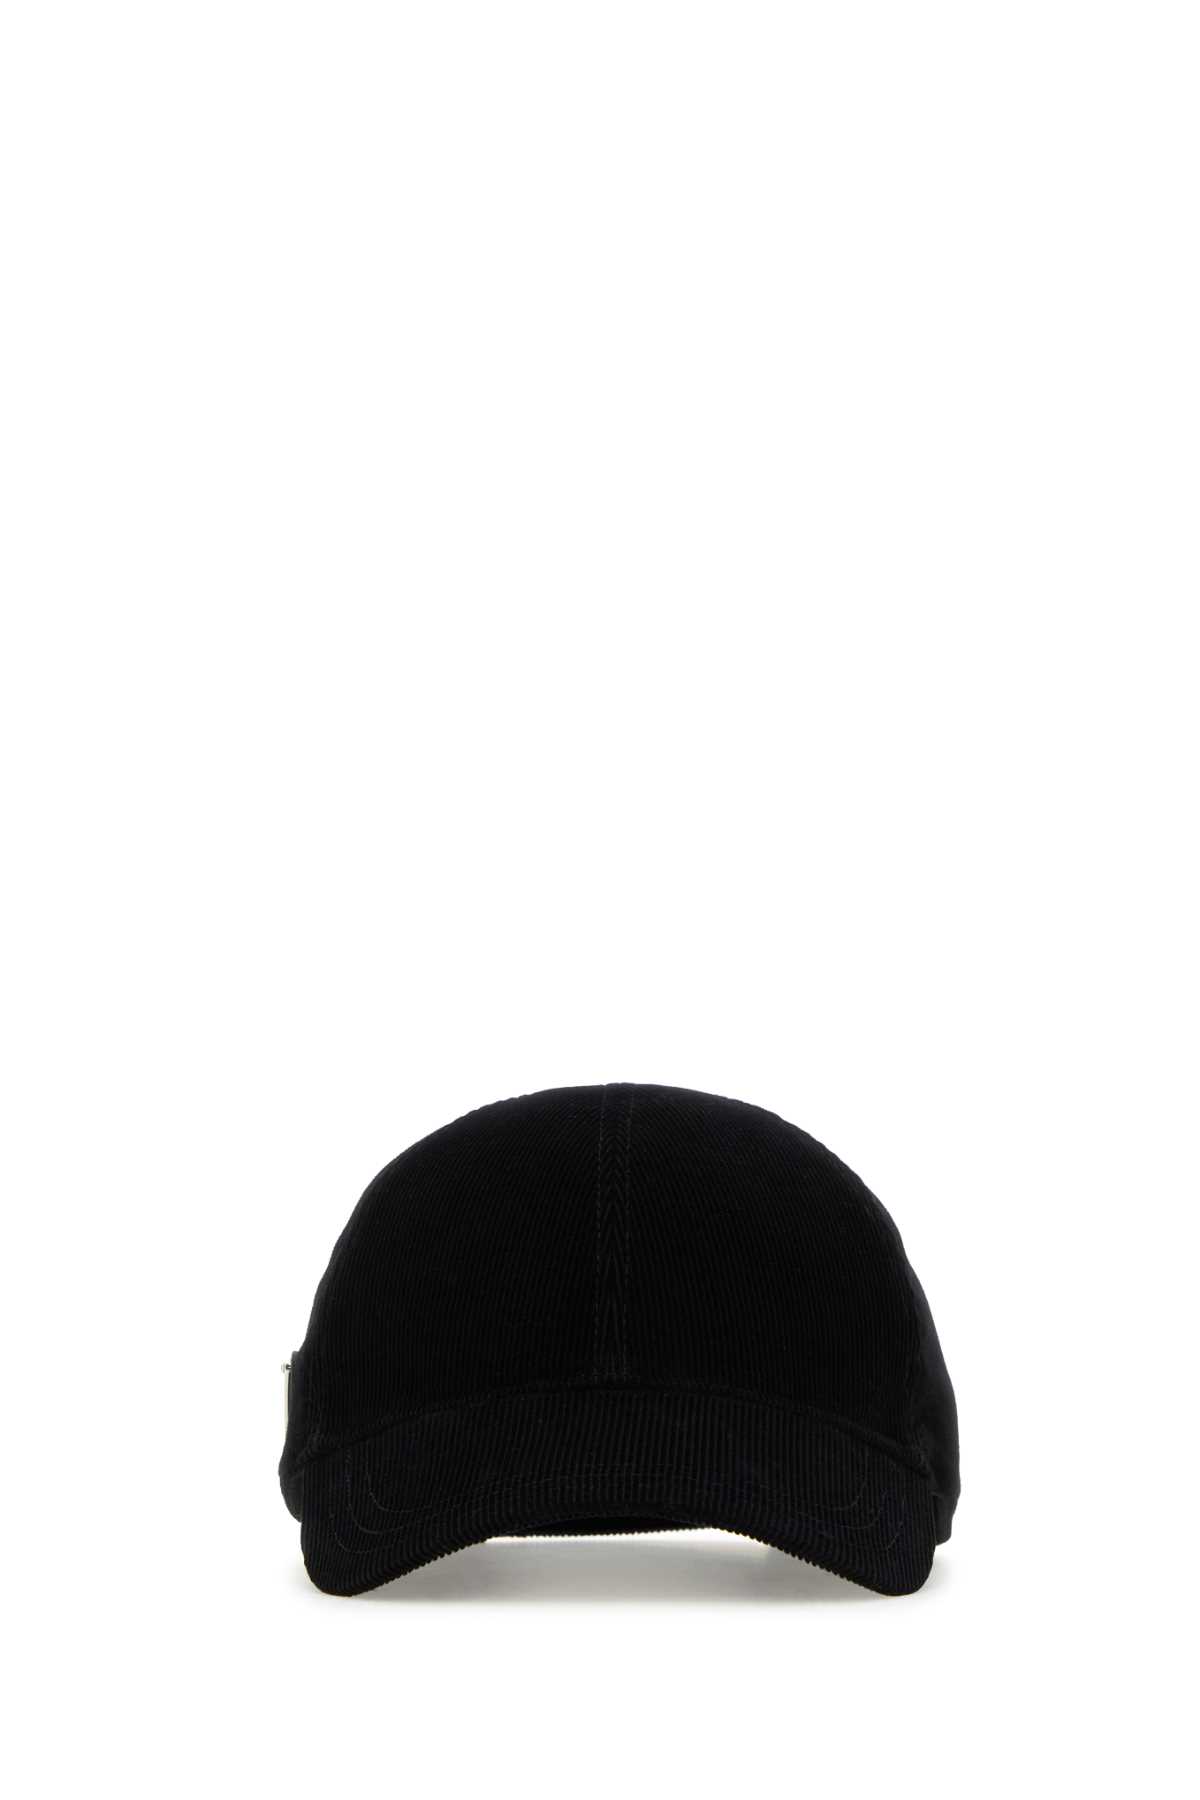 Prada Black Corduroy Baseball Cap